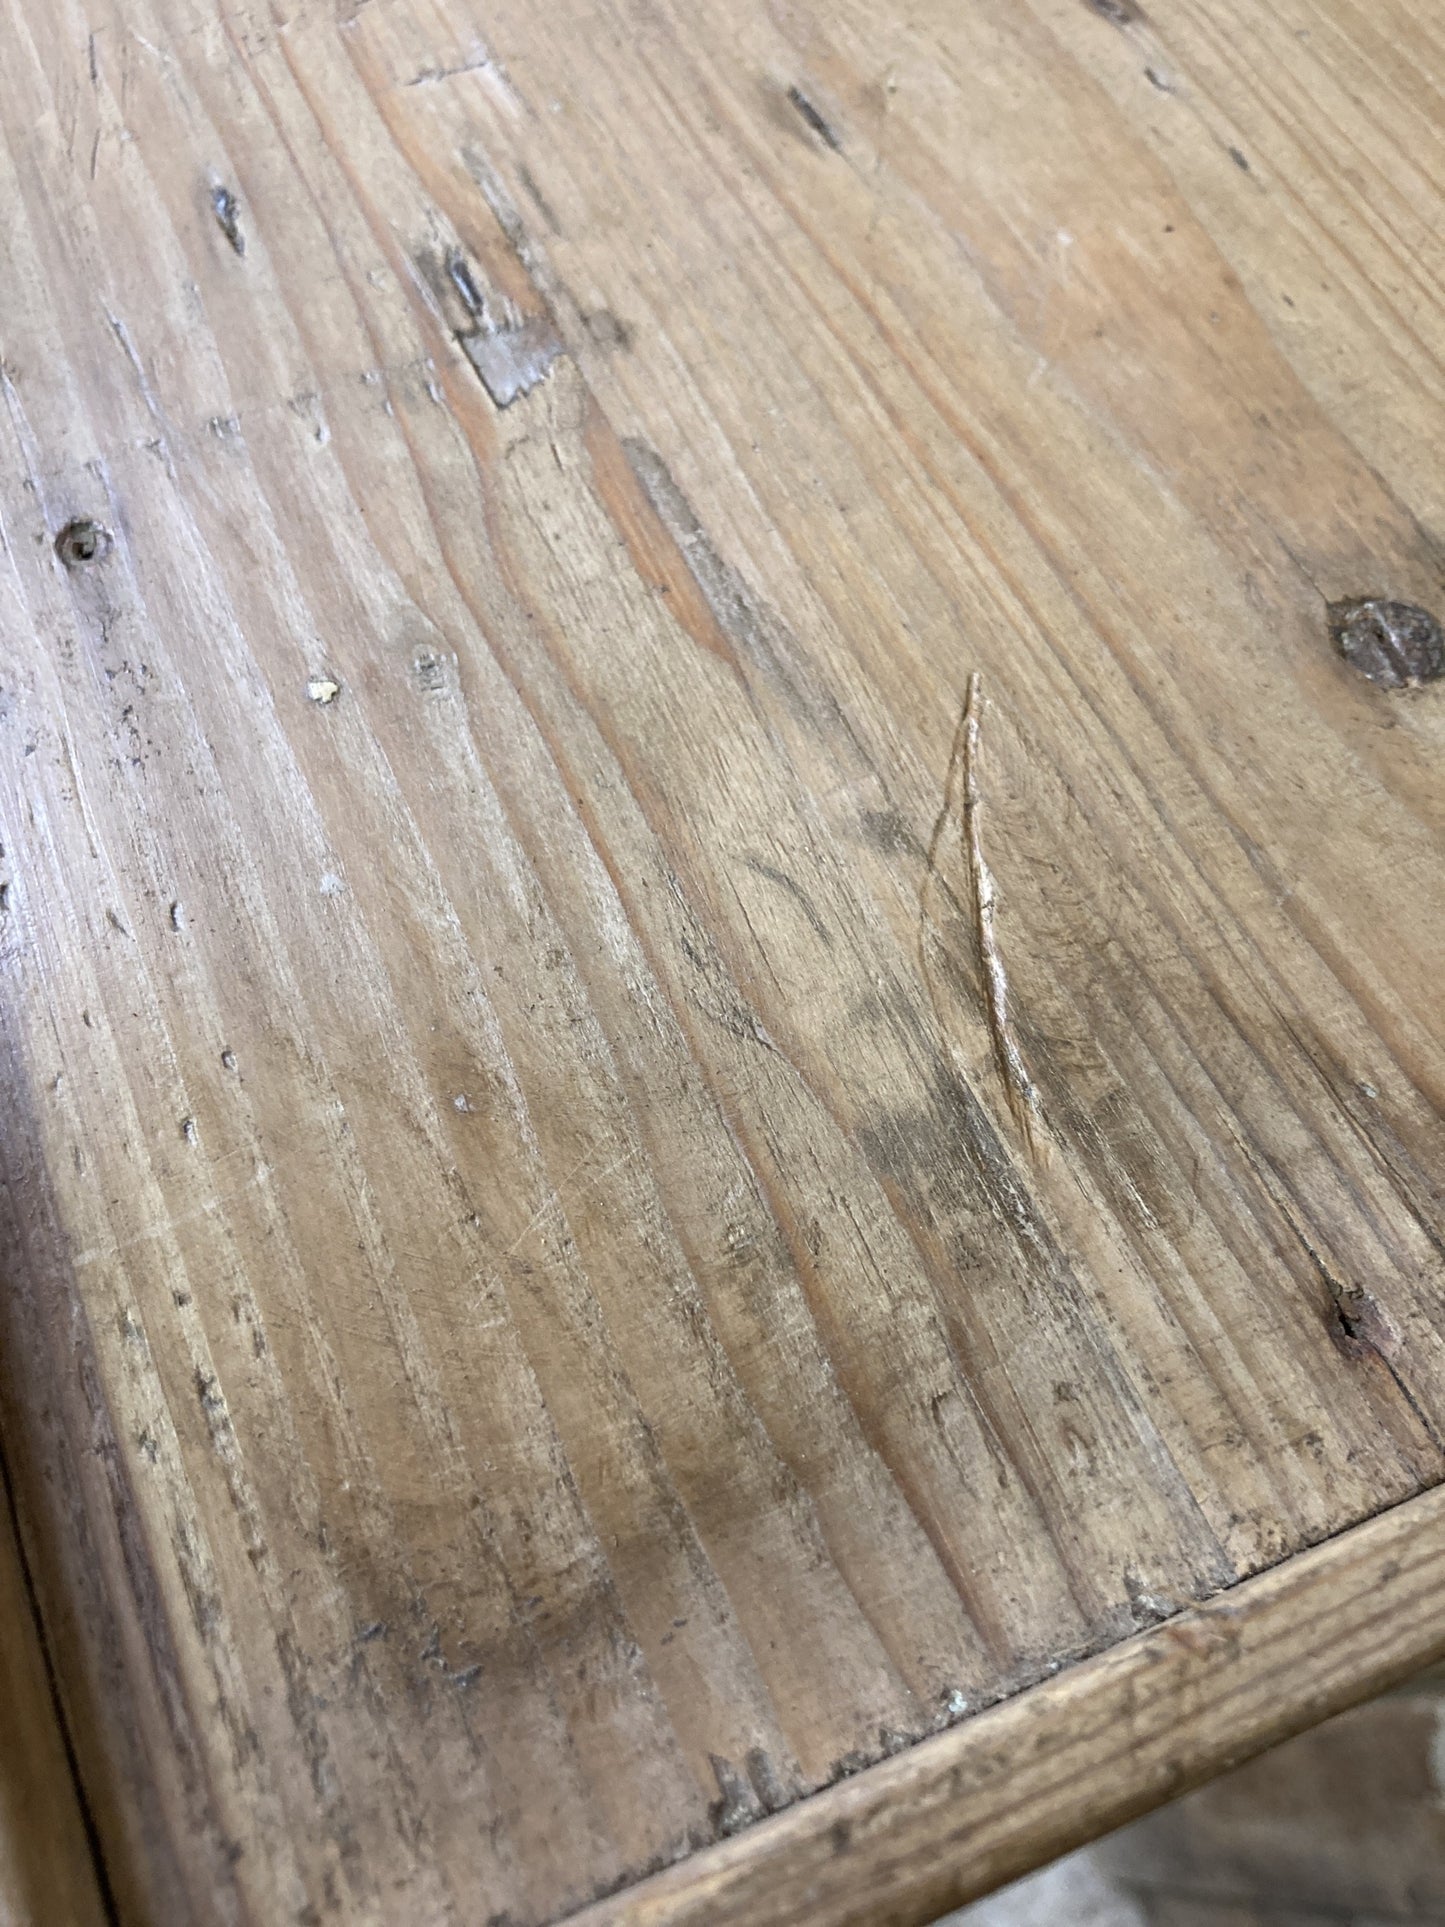 Old Kitchen Stripped Pine Waxed Single Shelf Wooden 1'H X 2' W